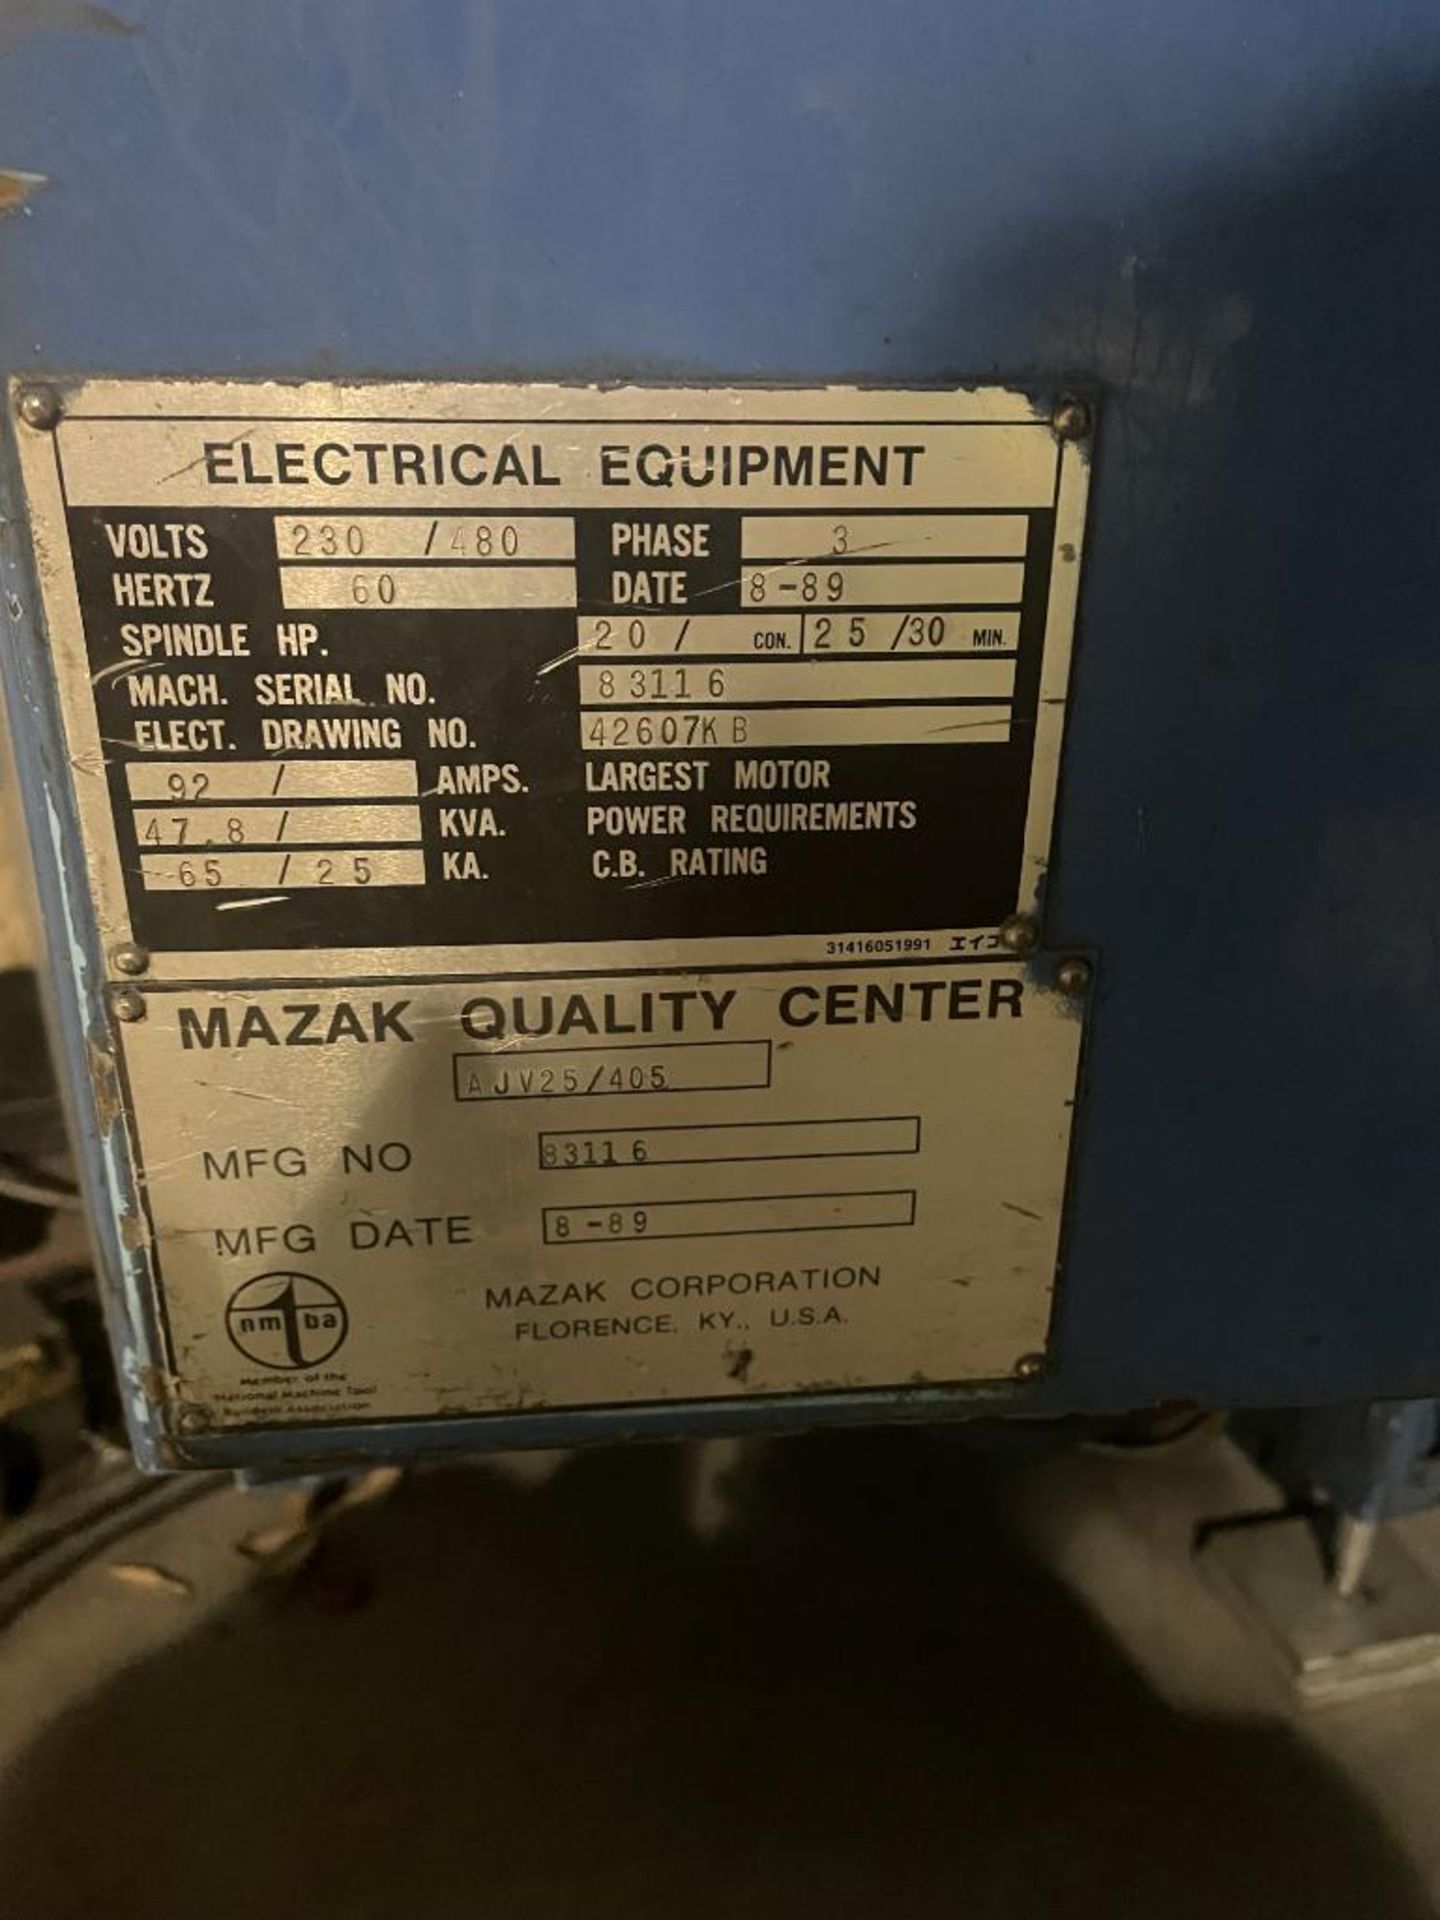 1989 MAZAK AJV25/405 CNC VERTICAL MACHINING CENTER, S/N 83116, MAZATOL M-32 CONTROL (LOCATION: 6670 - Image 4 of 7